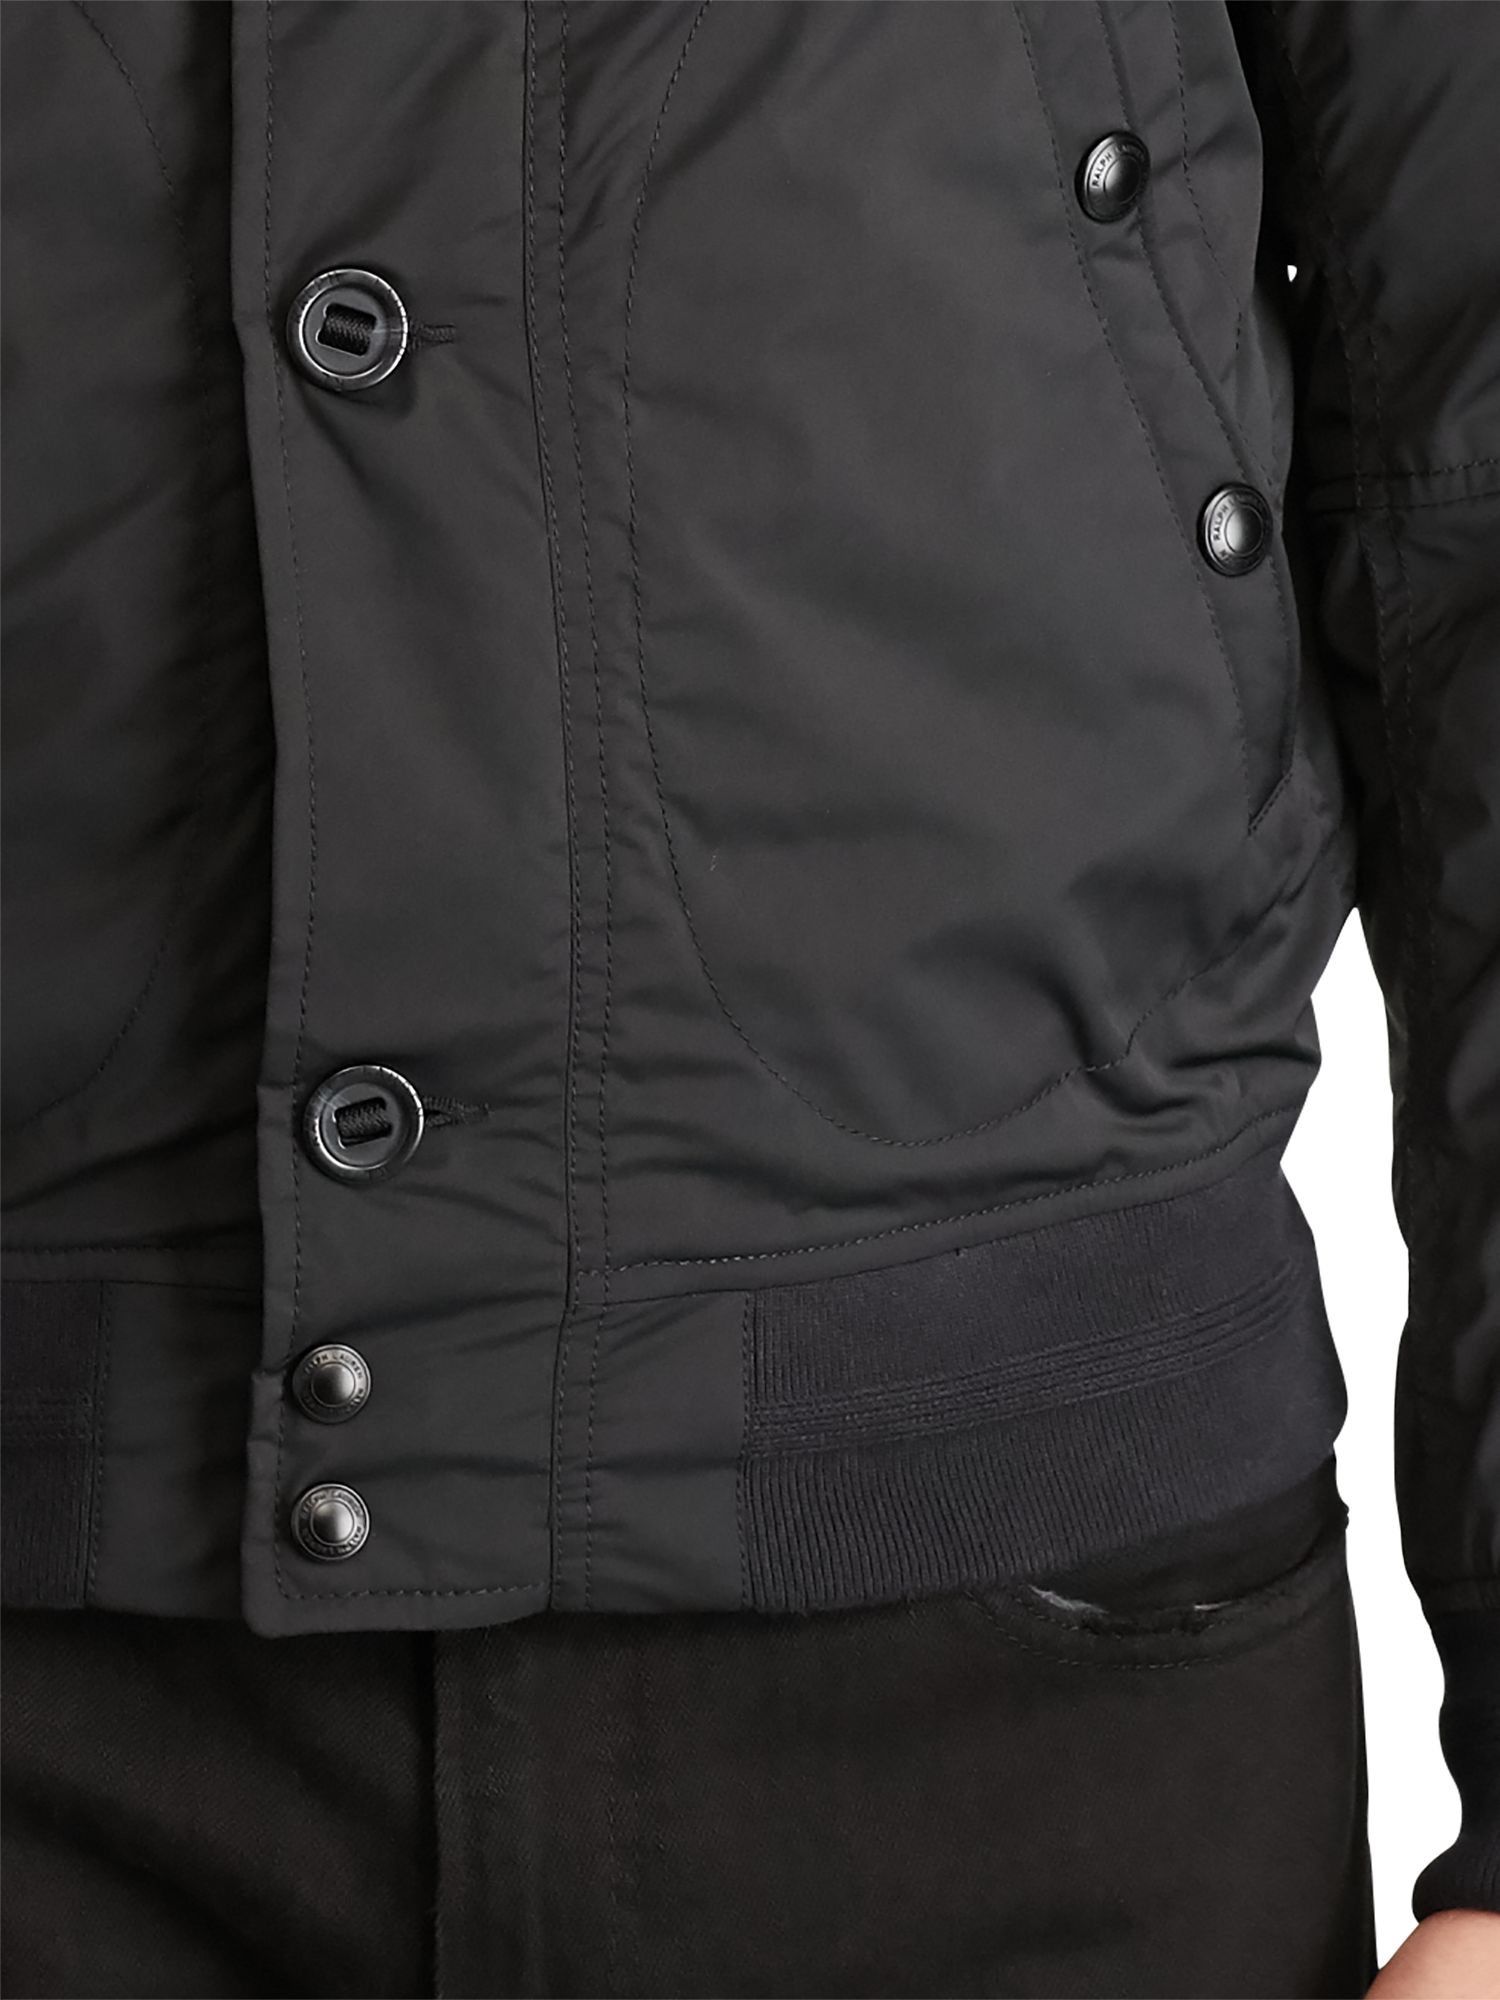 polo ralph lauren harrington jacket in black